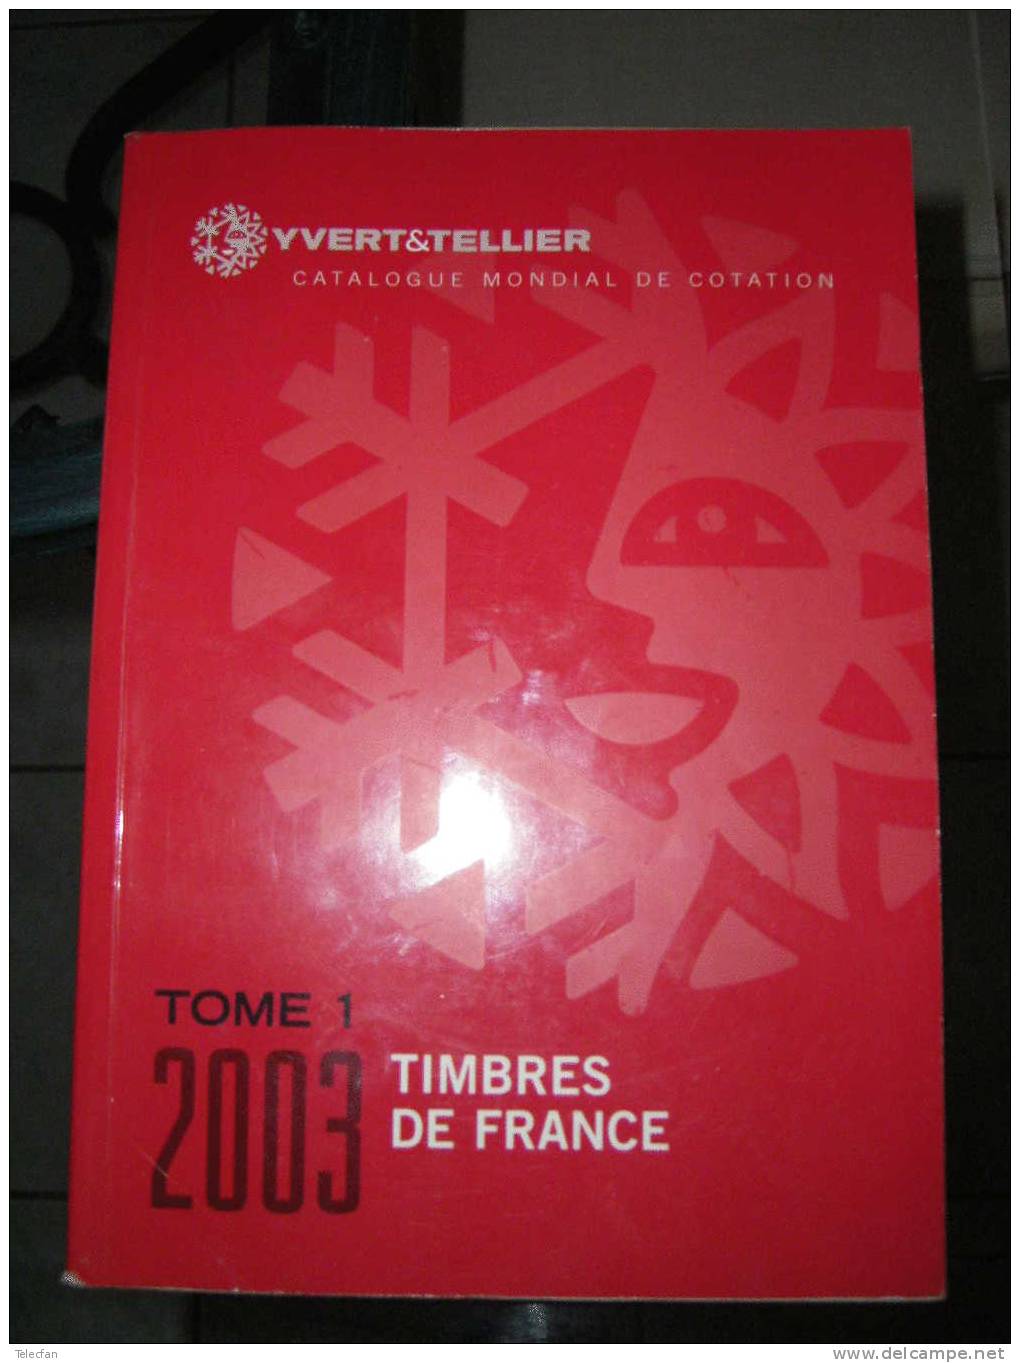 YVERT ET TELLIER TOME 1 TIMBRES DE FRANCE 2003 SUPERBE - France